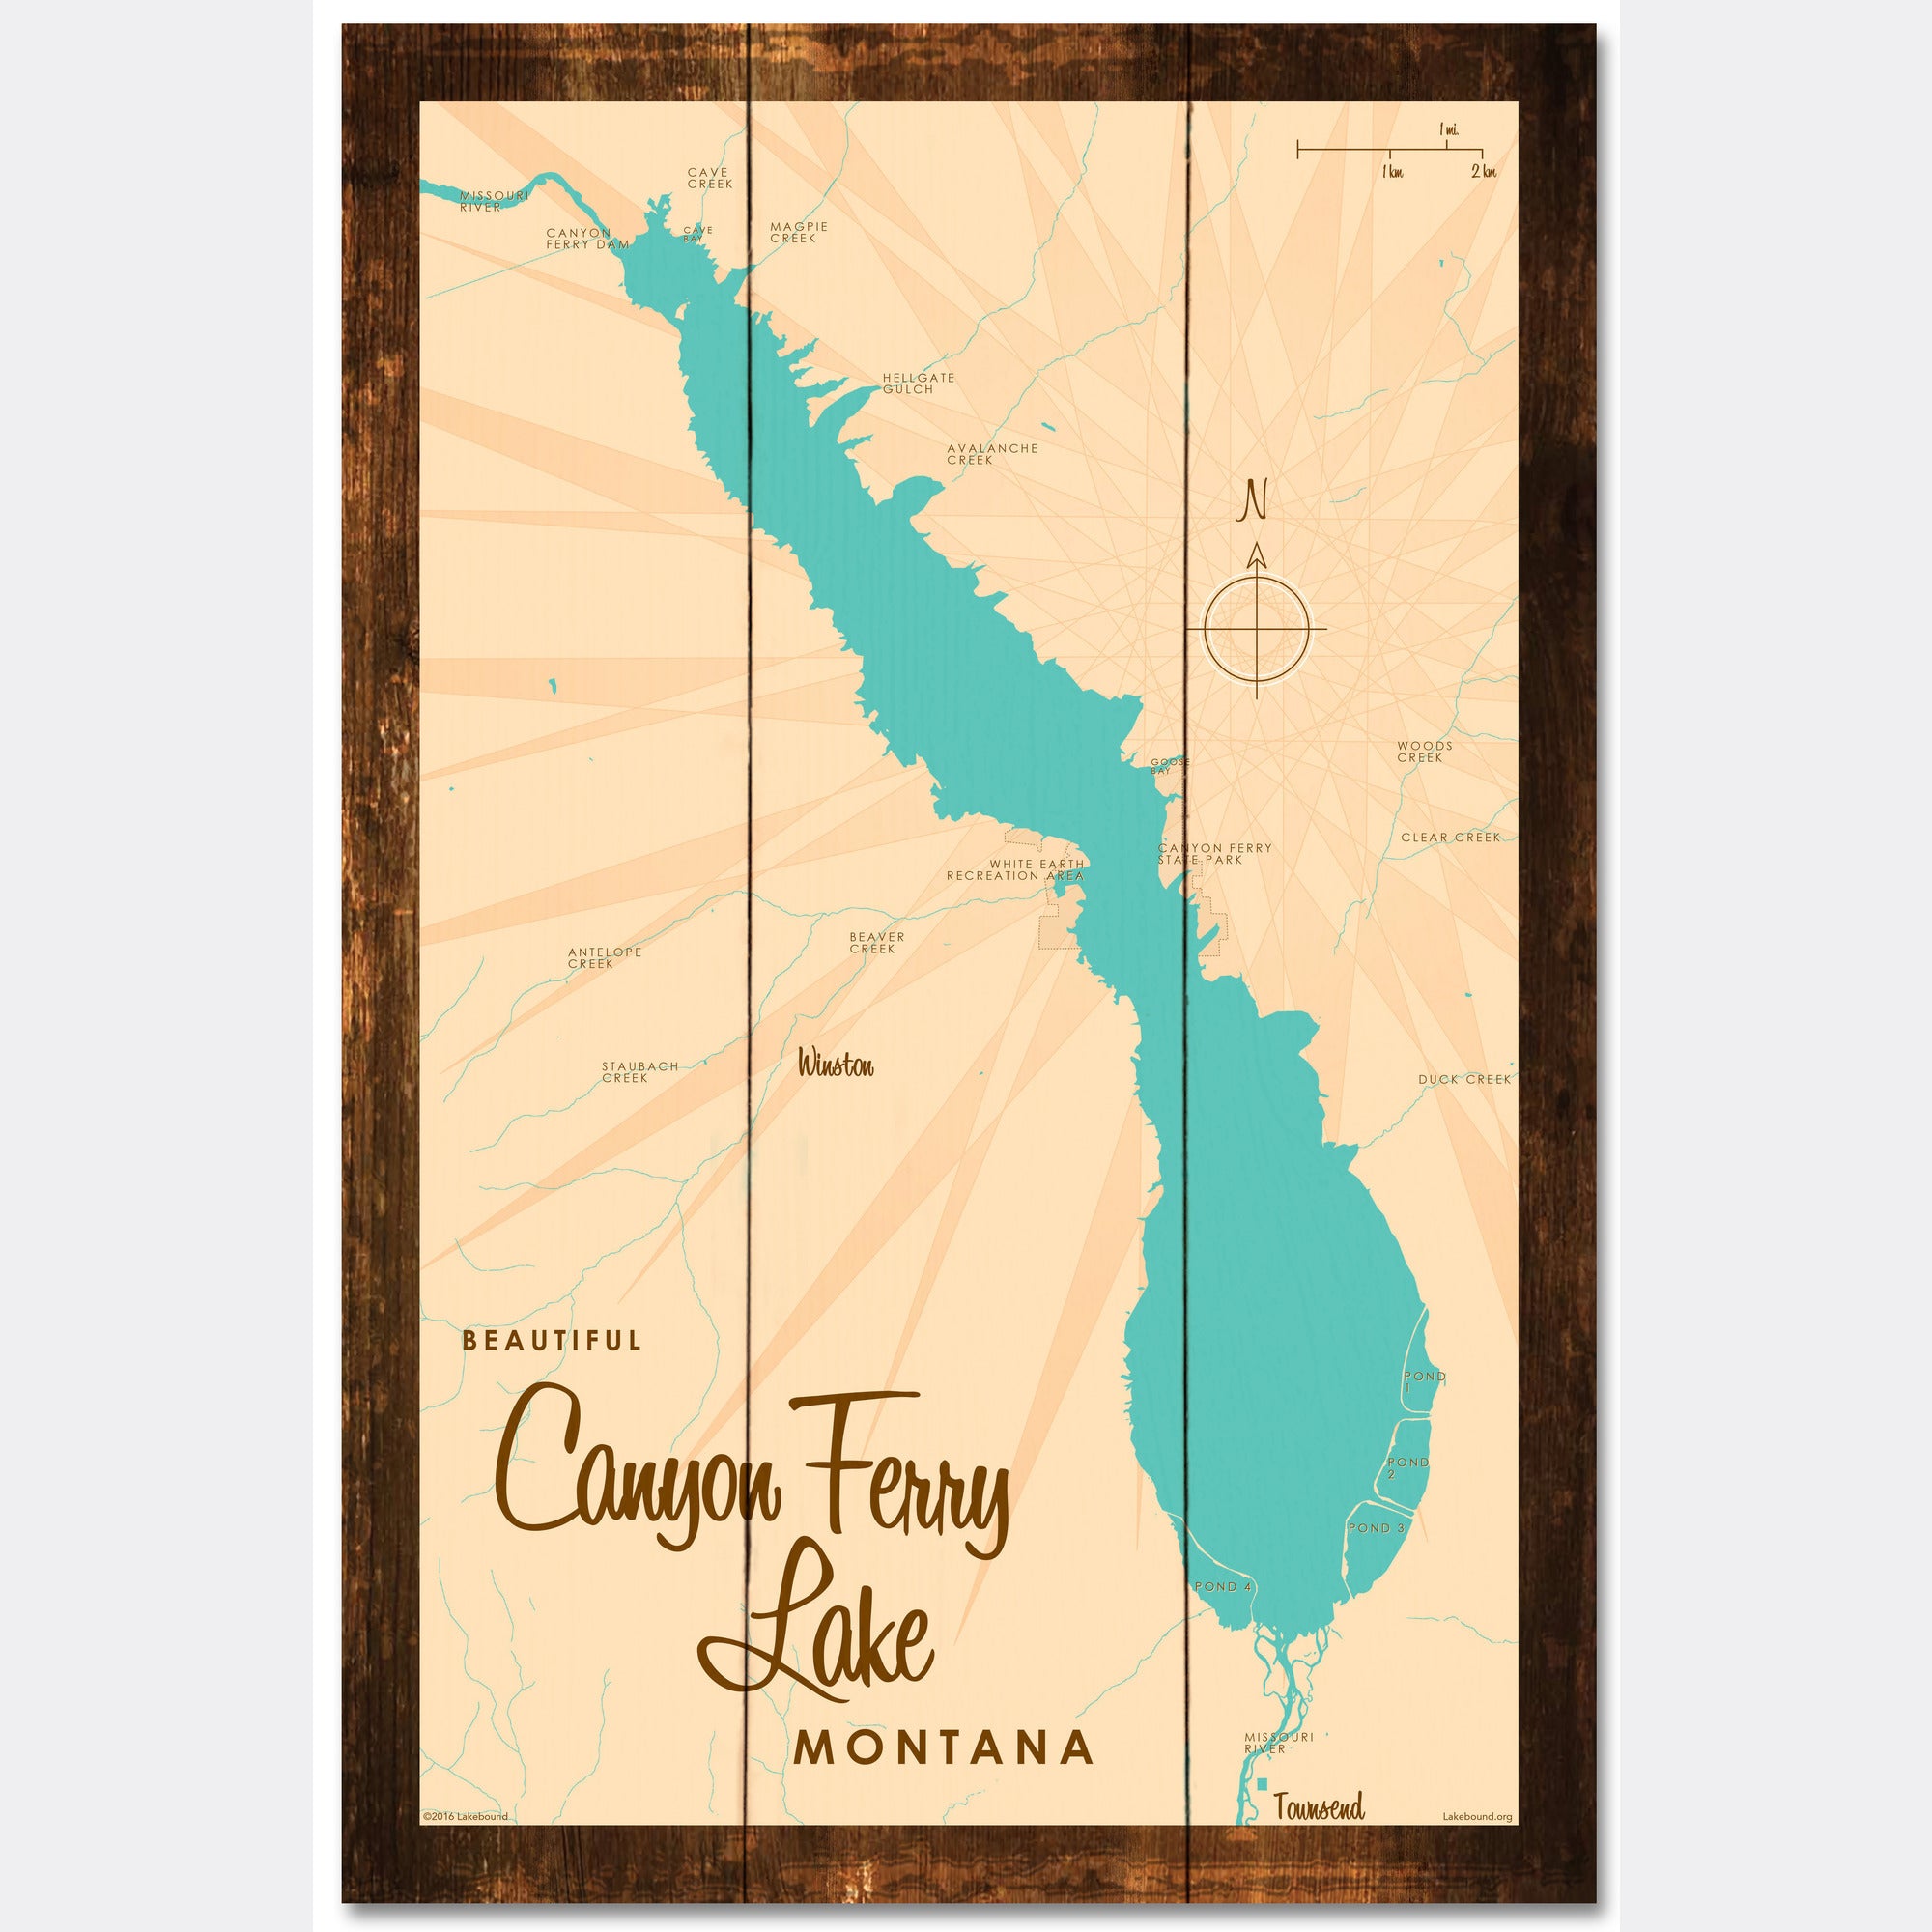 Canyon Ferry Lake Montana, Rustic Wood Sign Map Art